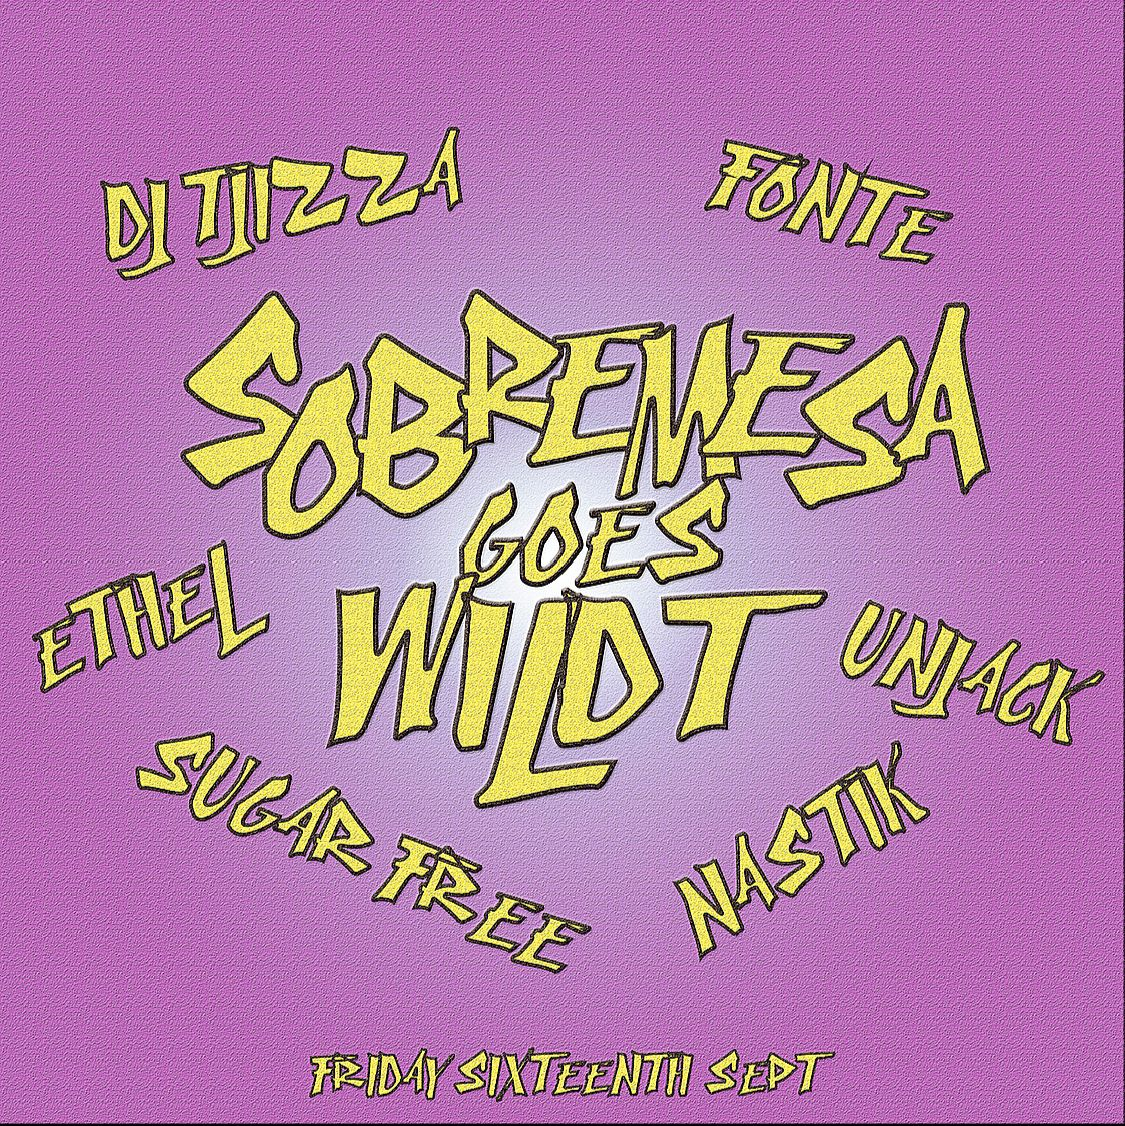 Sobremesa x Wildt: DJ Tjizza, Ethel, Sugar Free, Fonte, Unjack, Nastik - Flyer front